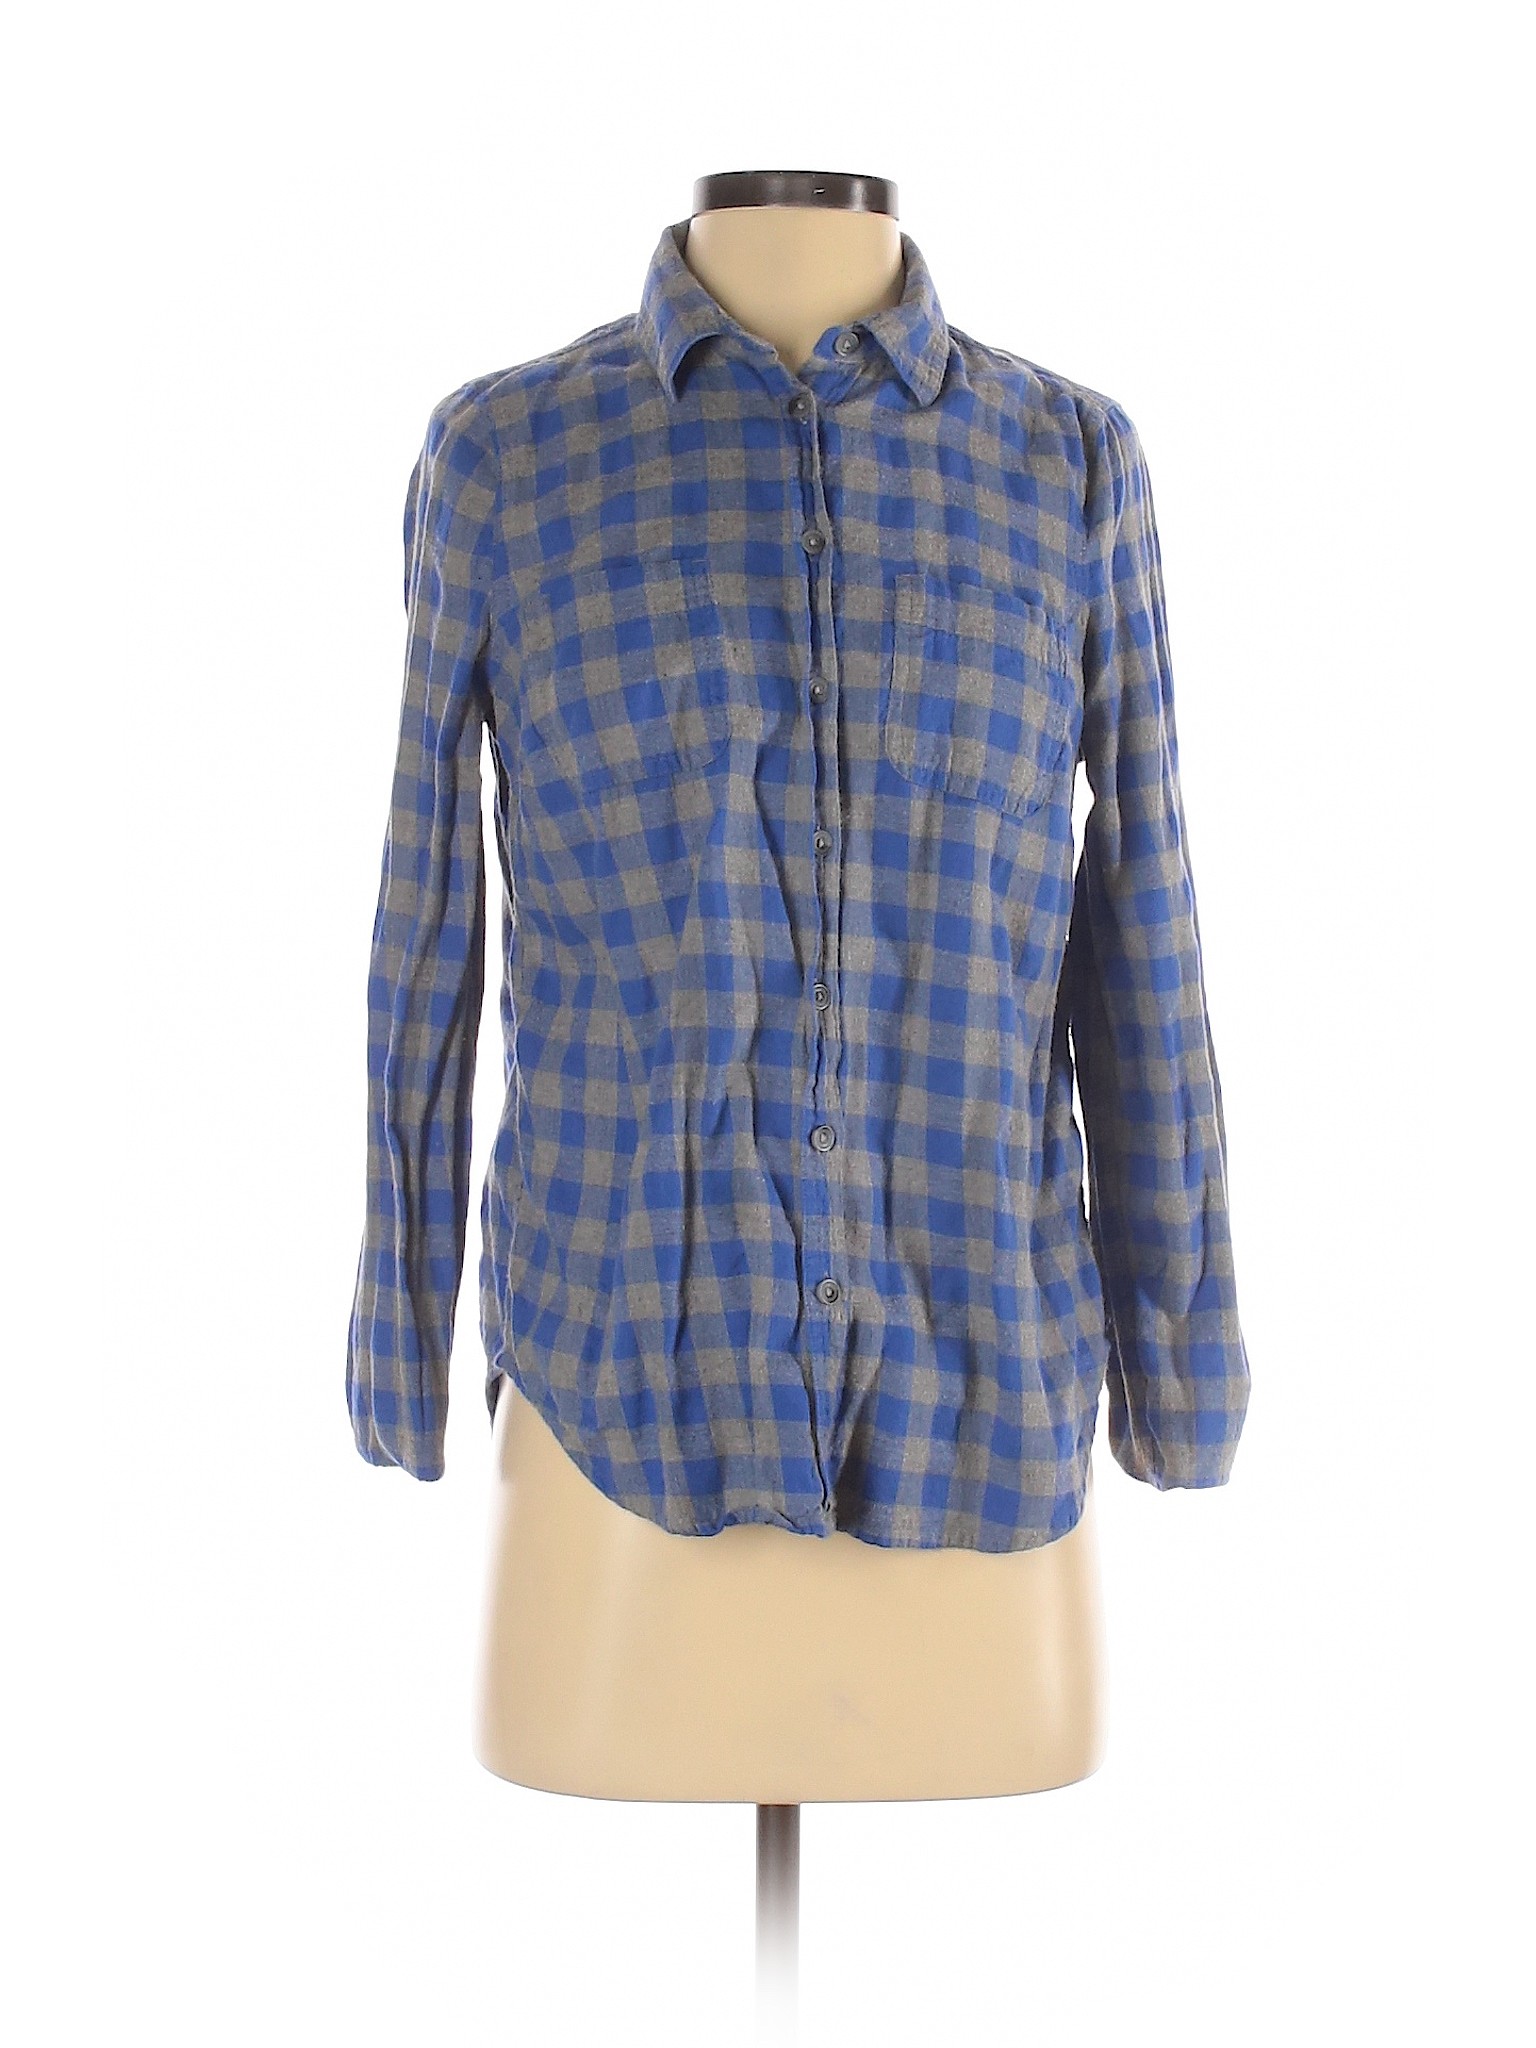 SONOMA life + style Women Blue Long Sleeve Button-Down Shirt S | eBay